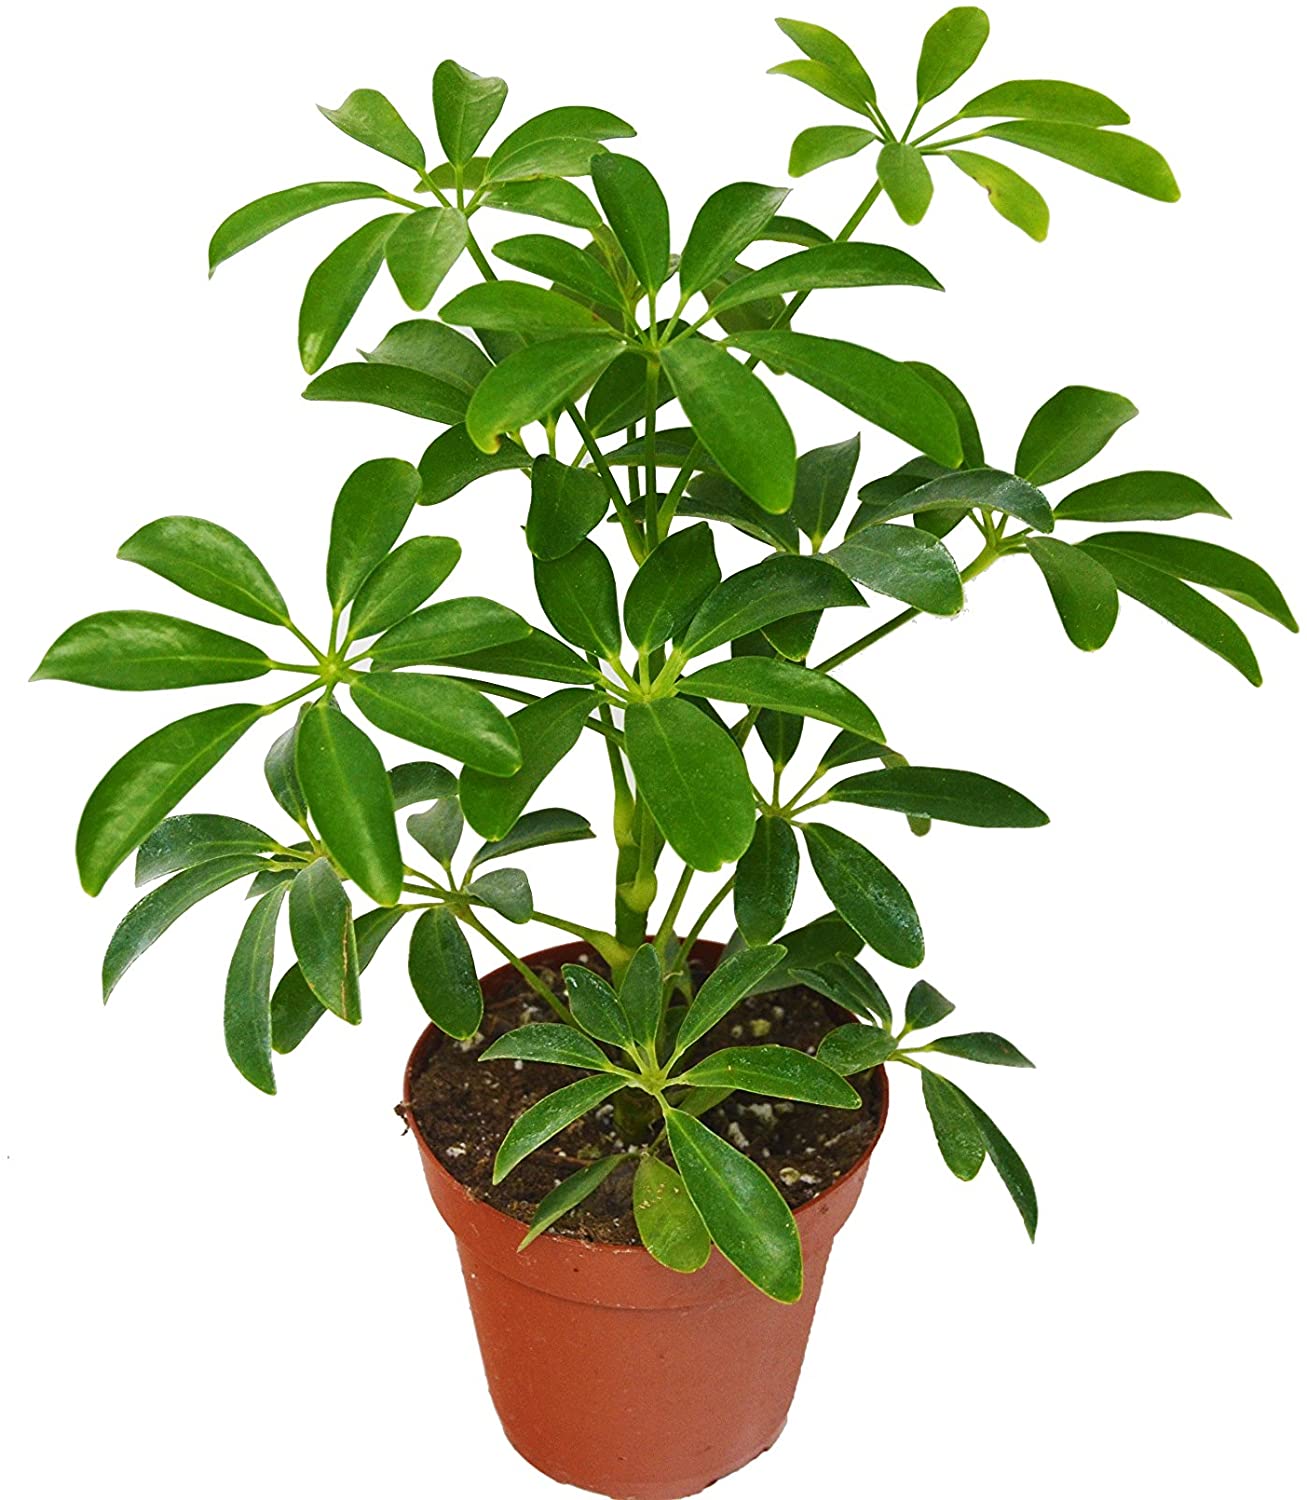 Umbrella plant- Care, Propagation, Growing(All About Schefflera)